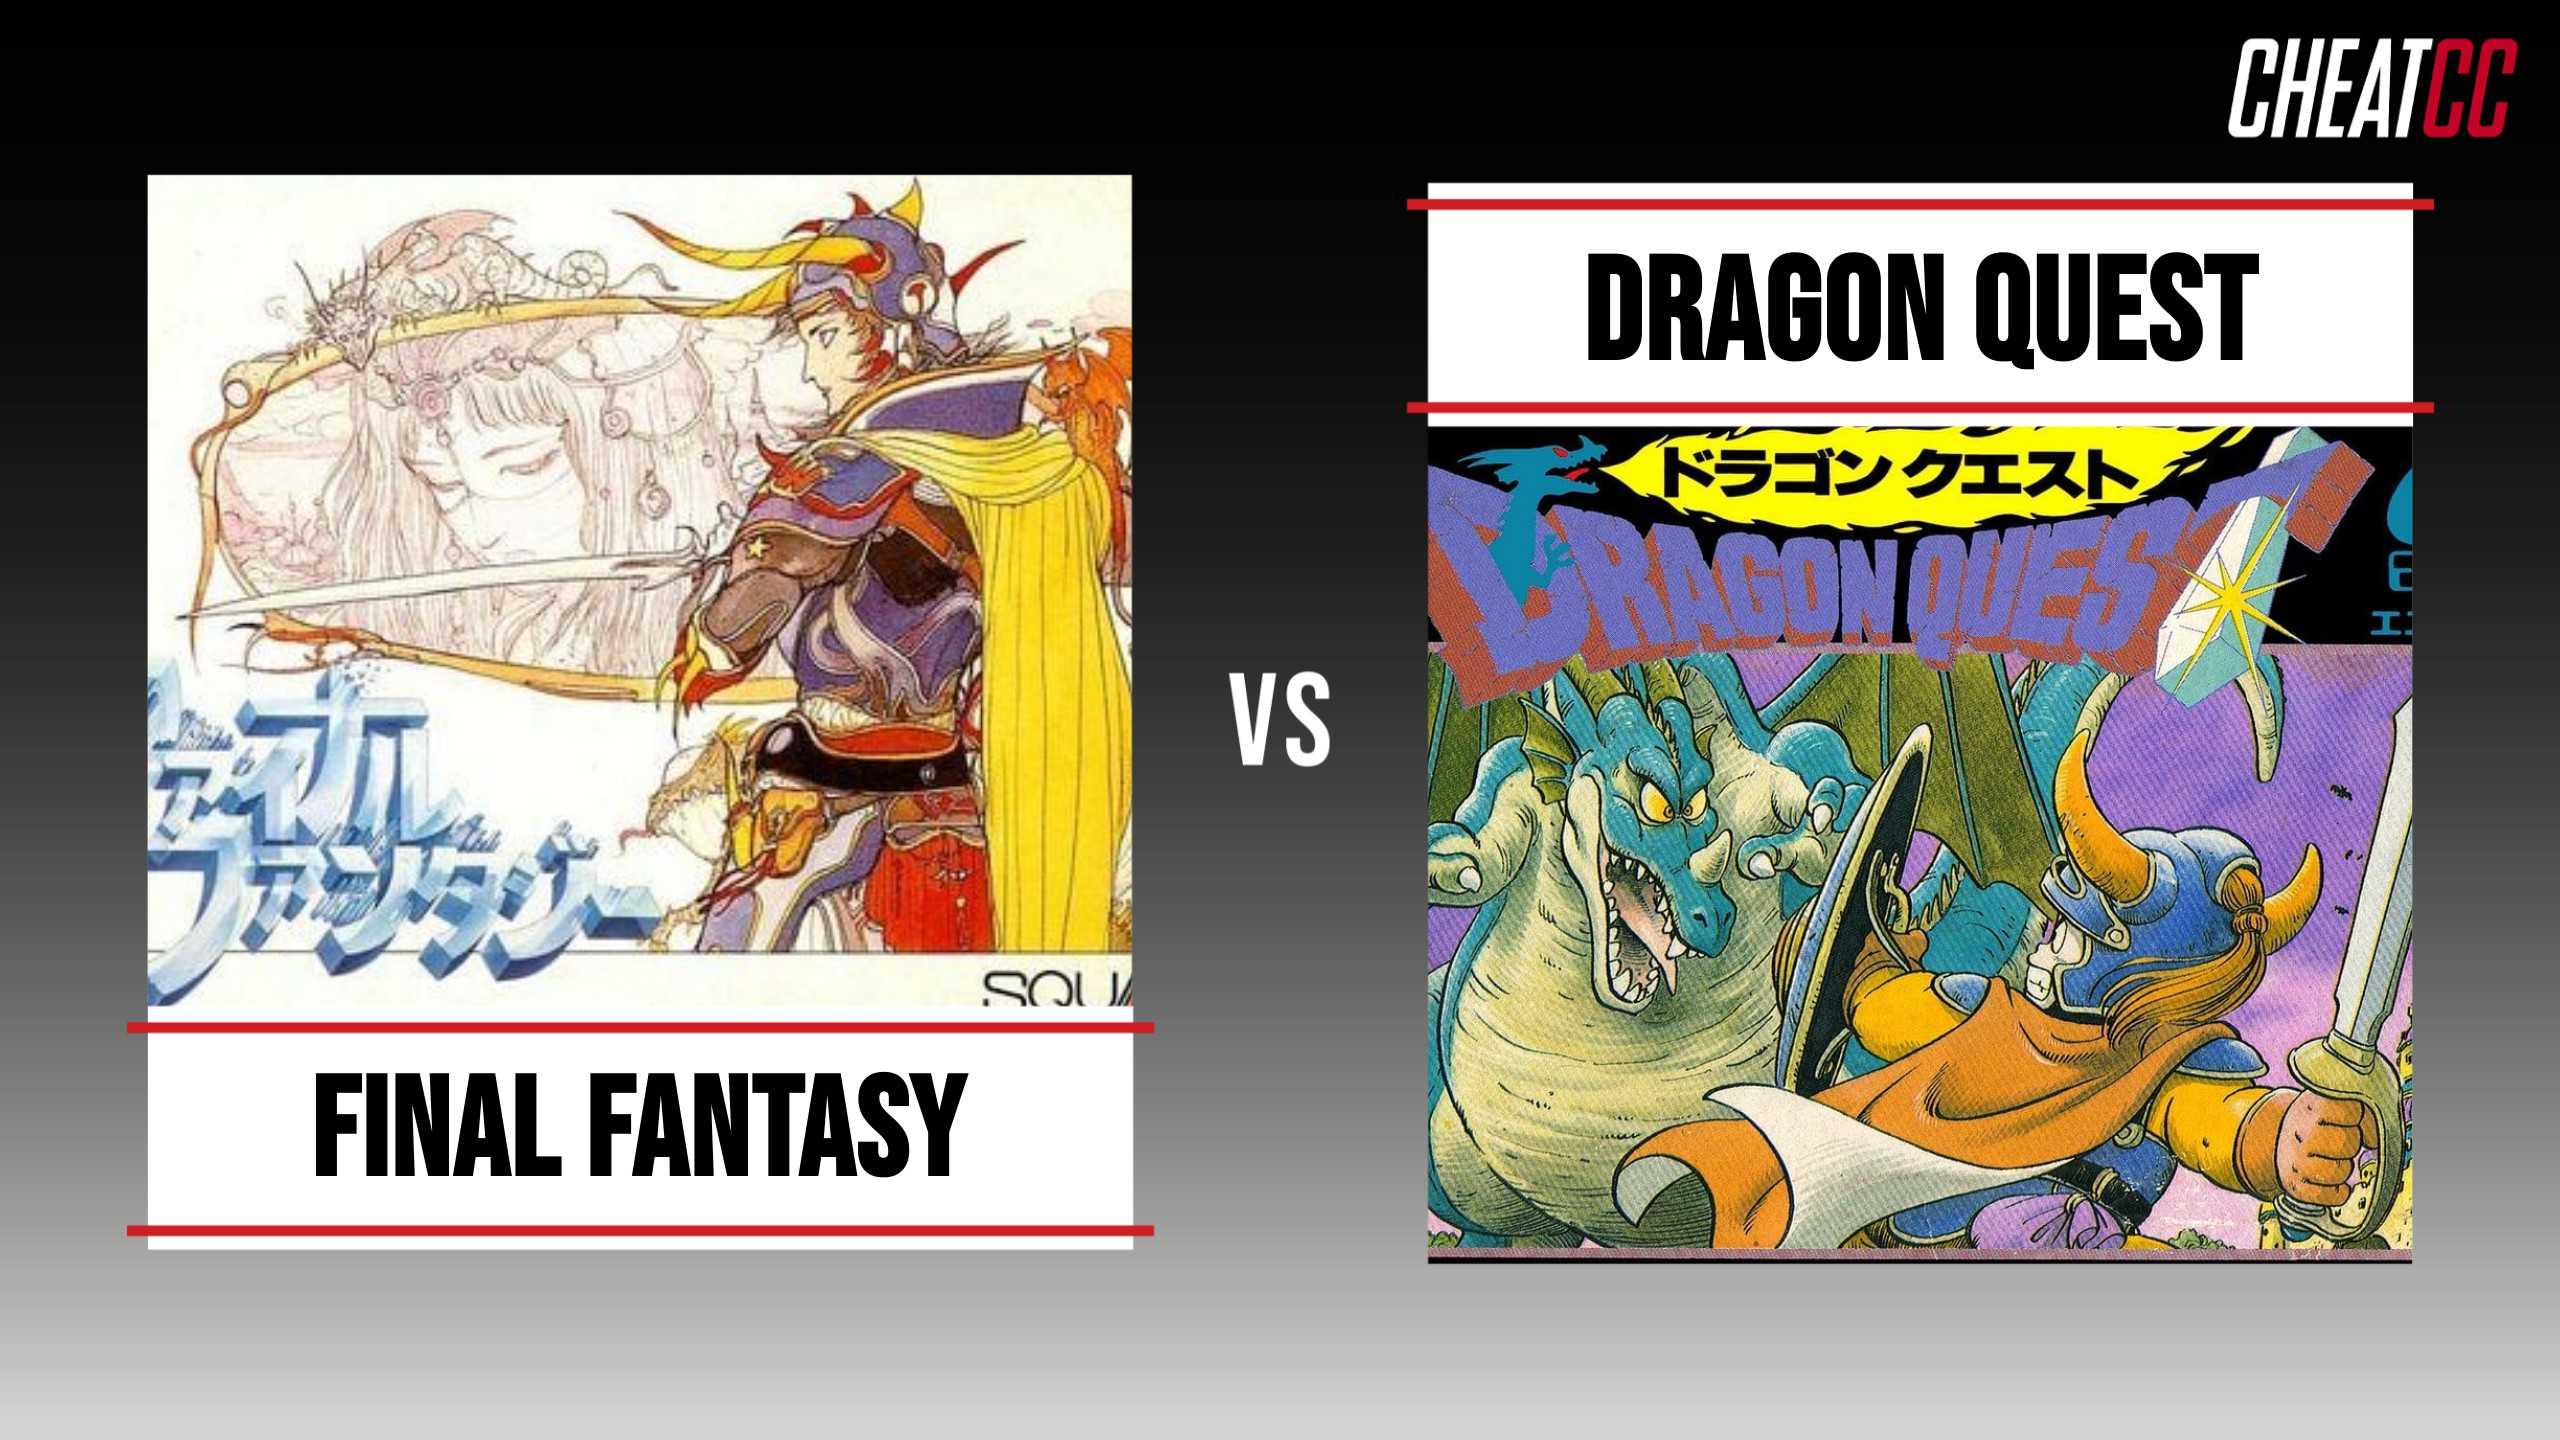 Final Fantasy vs Dragon Quest